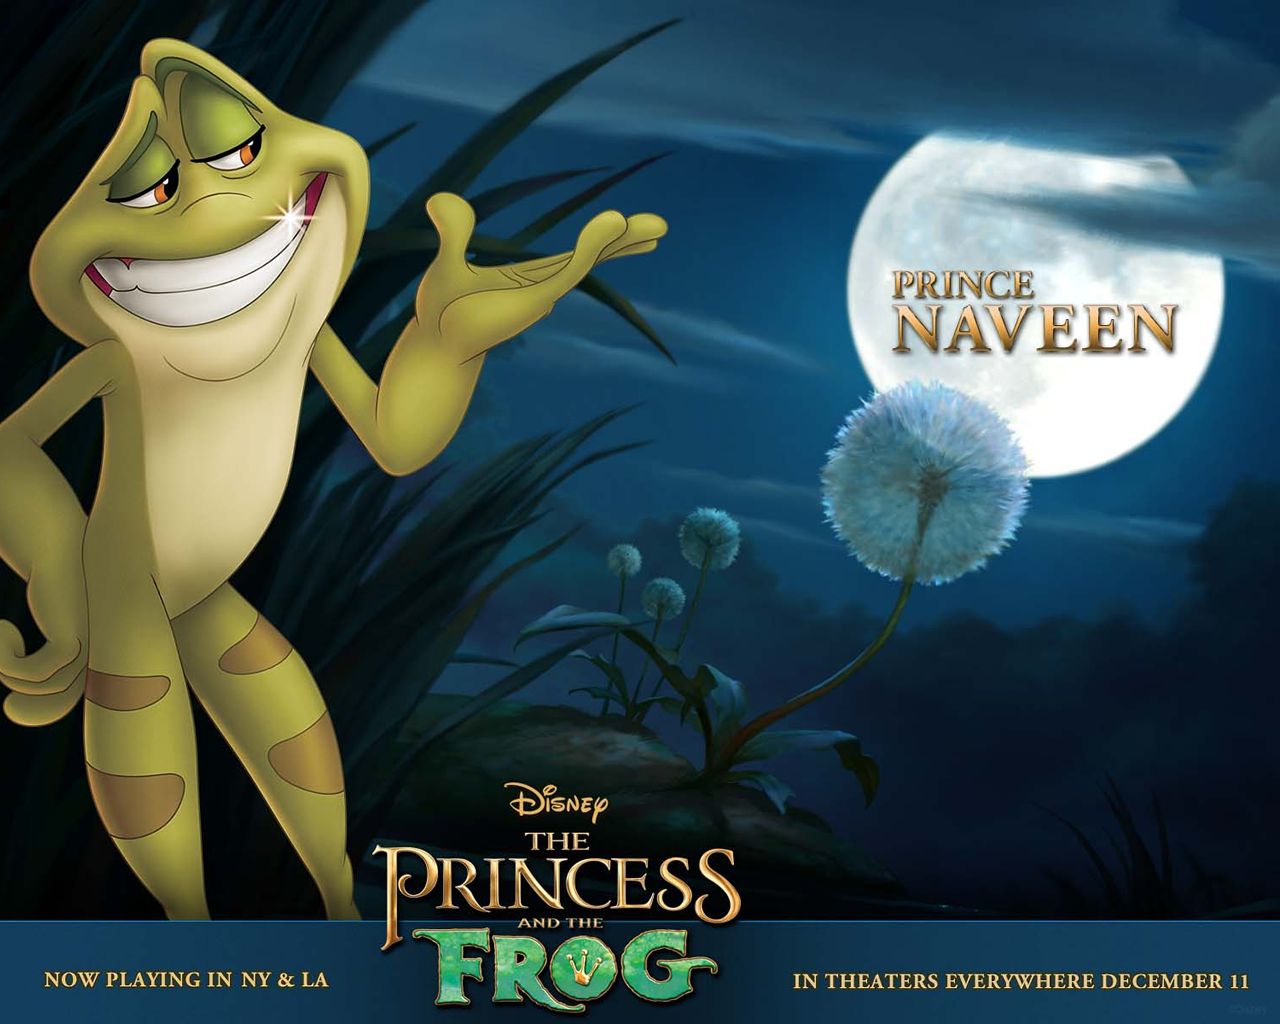 "The Princess and the Frog: Prince Naveen" desktop wallpaper (1280 x 1024 pixels)